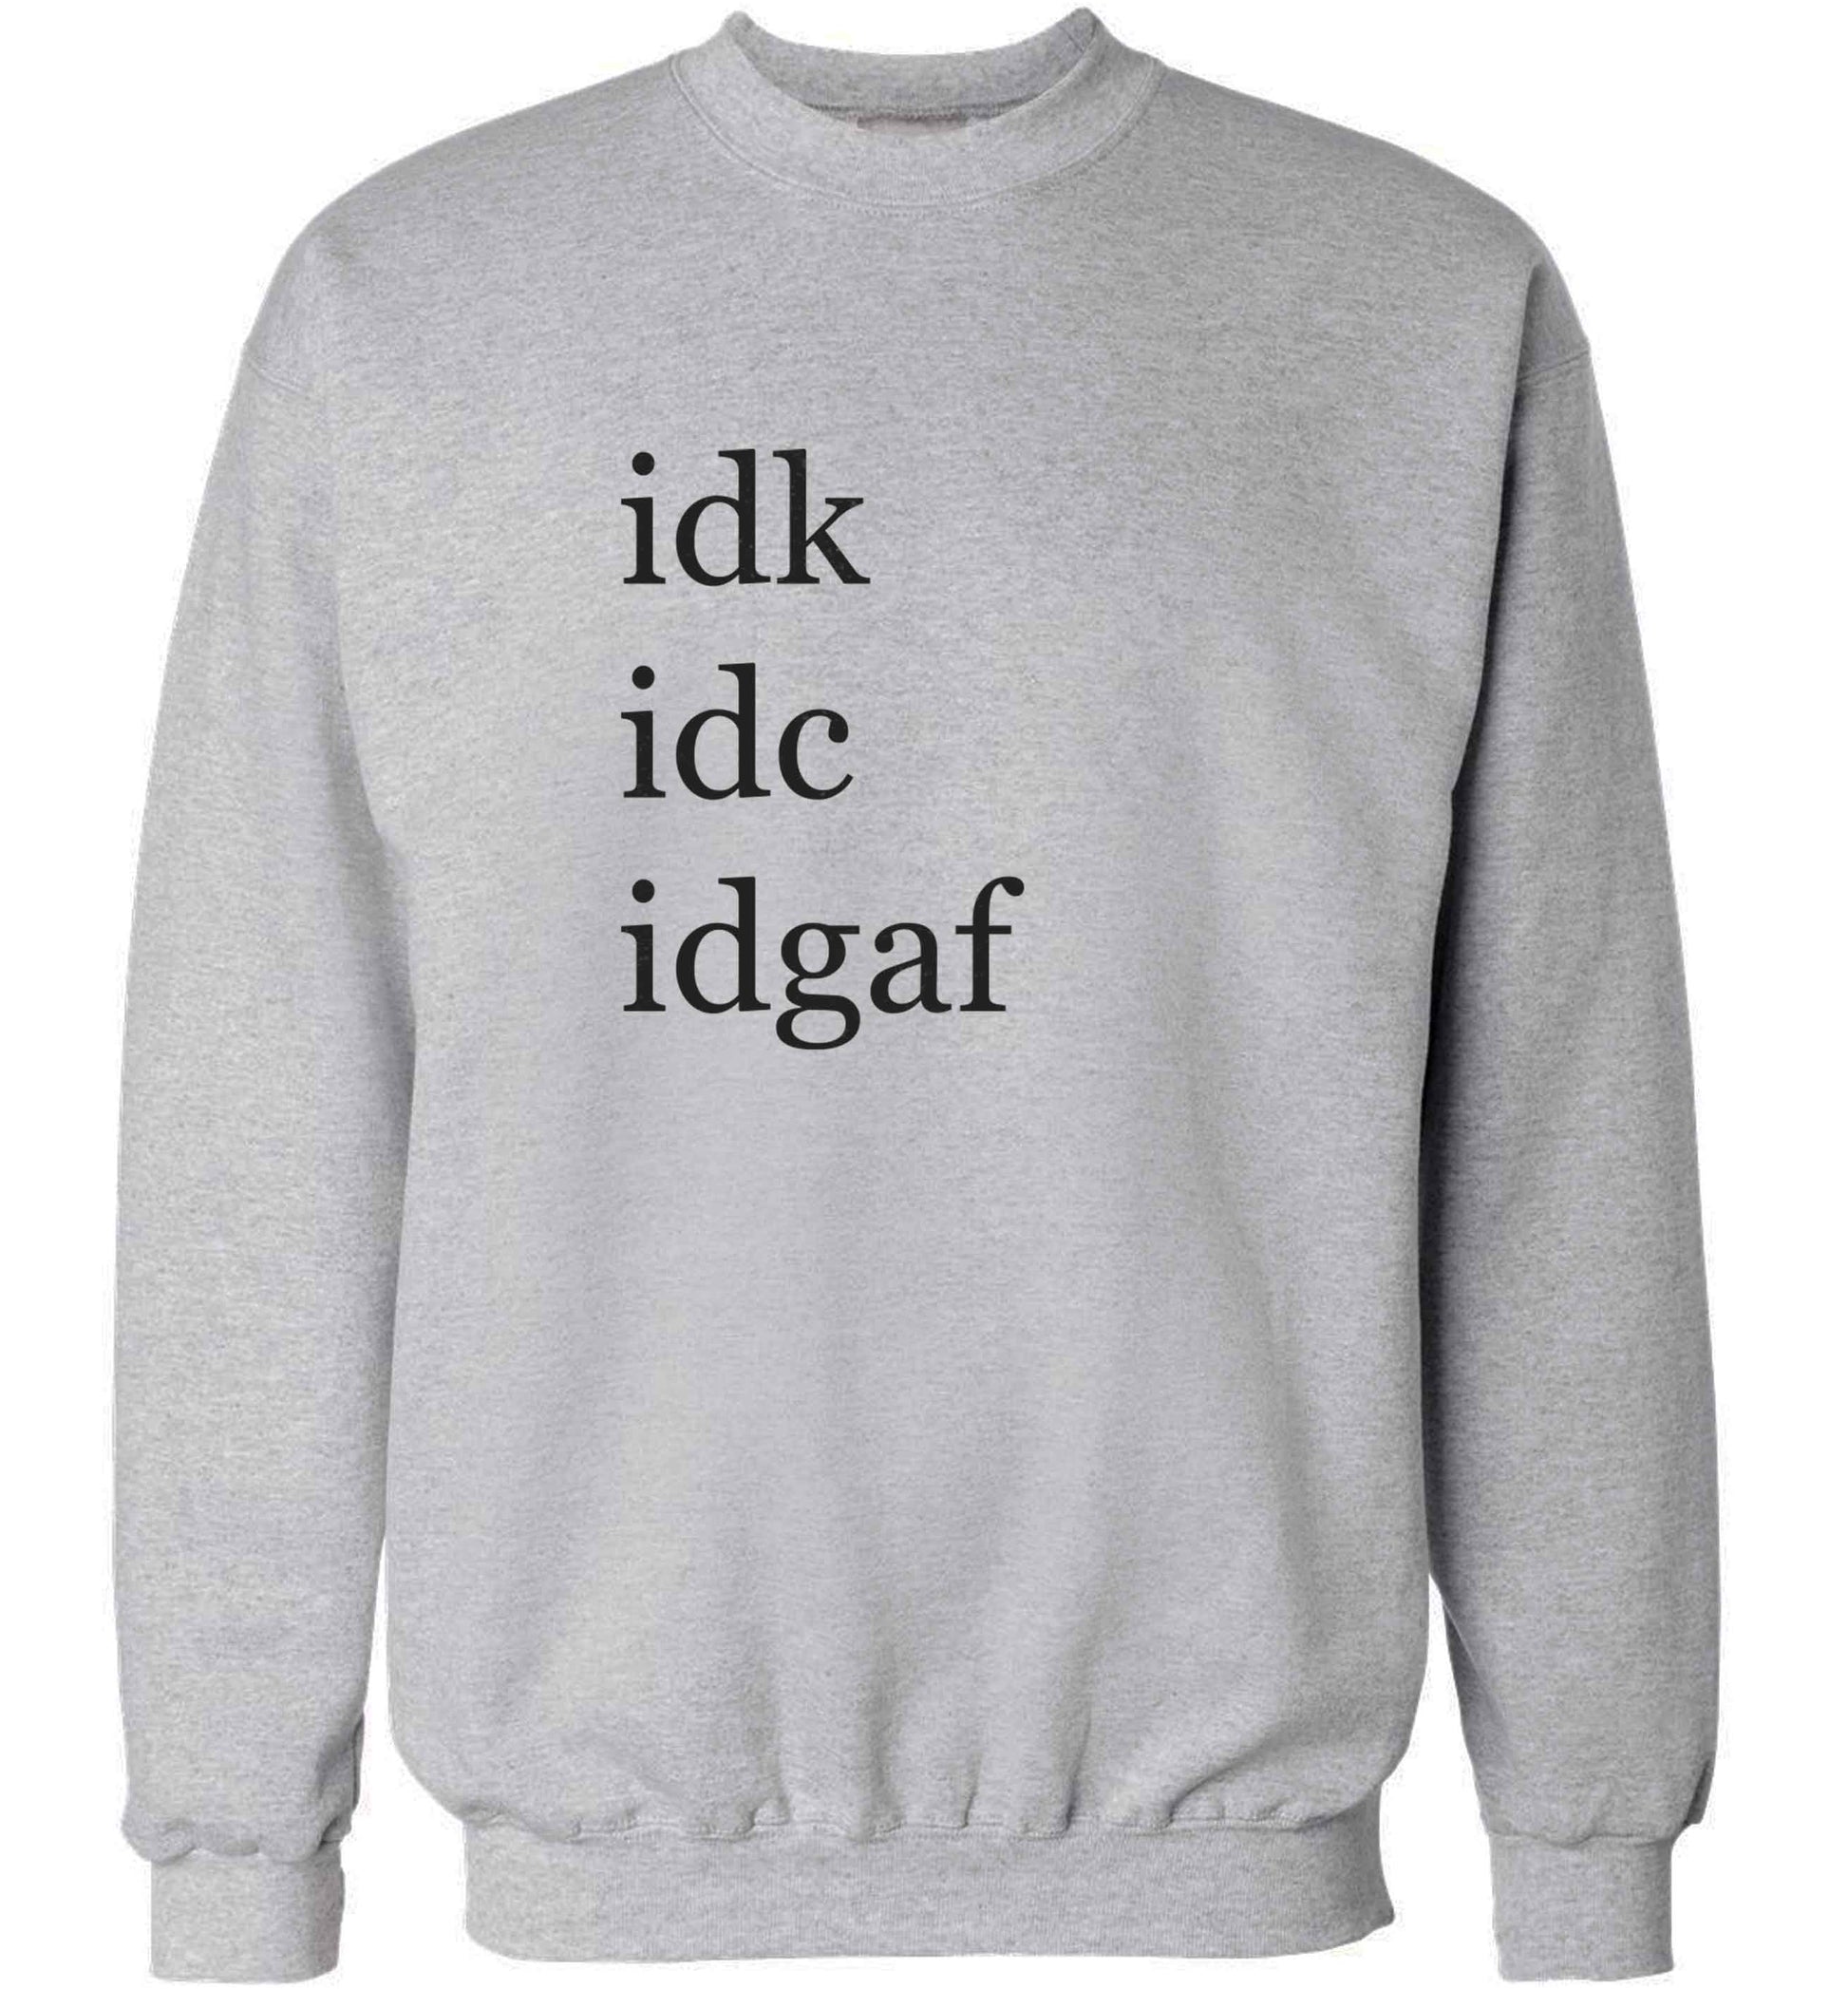 Idk Idc Idgaf adult's unisex grey sweater 2XL